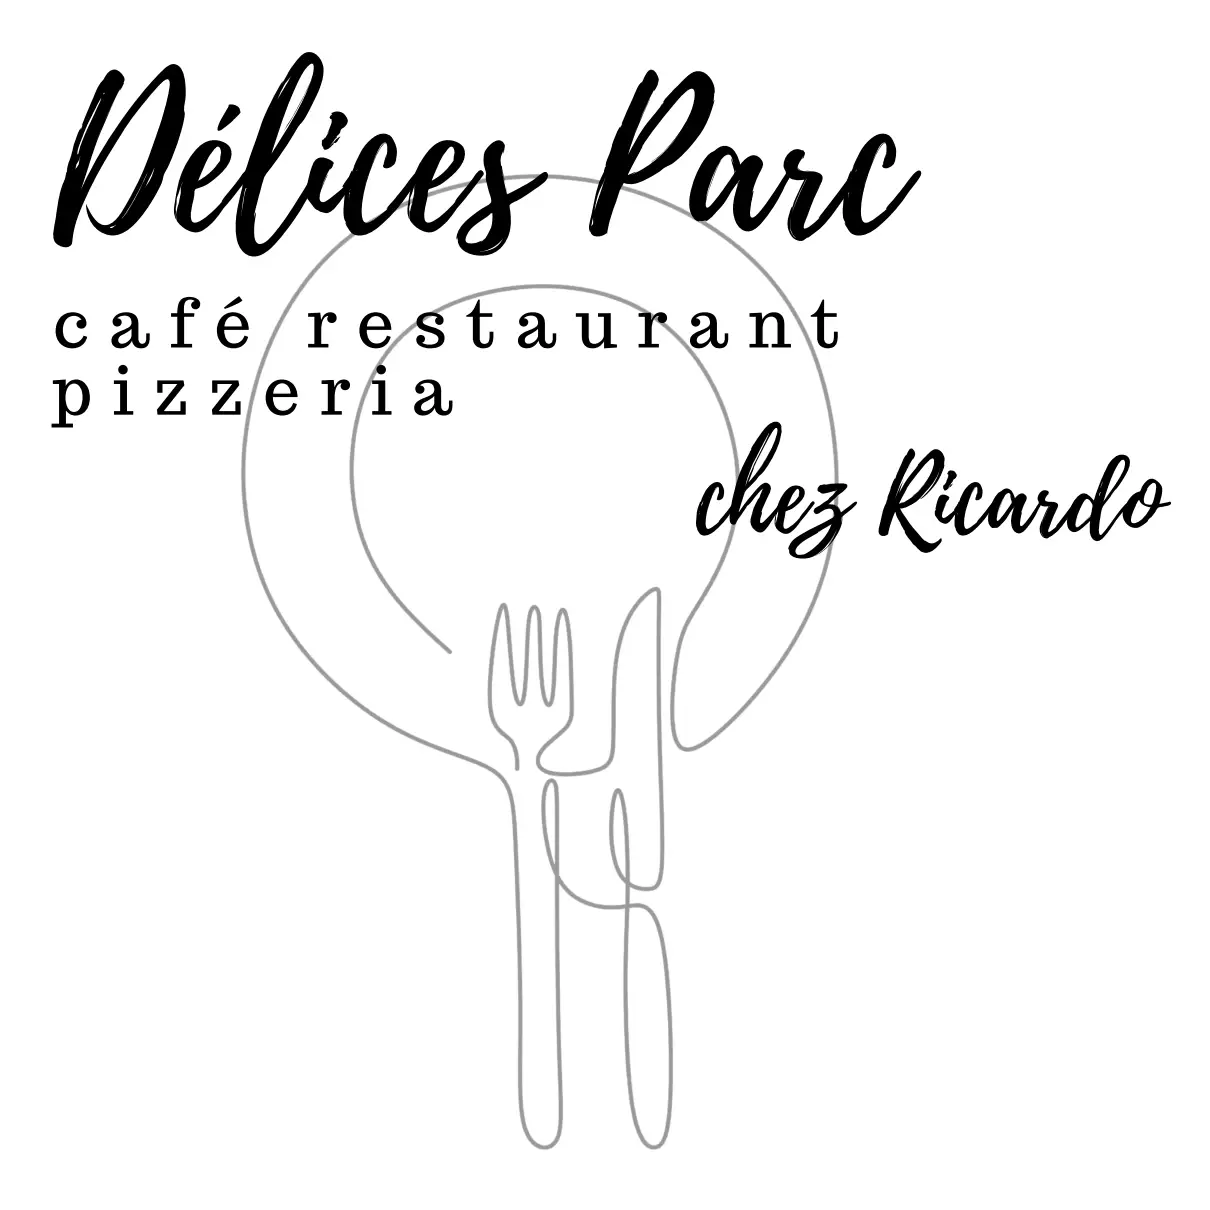 Delicesparc Restaurant